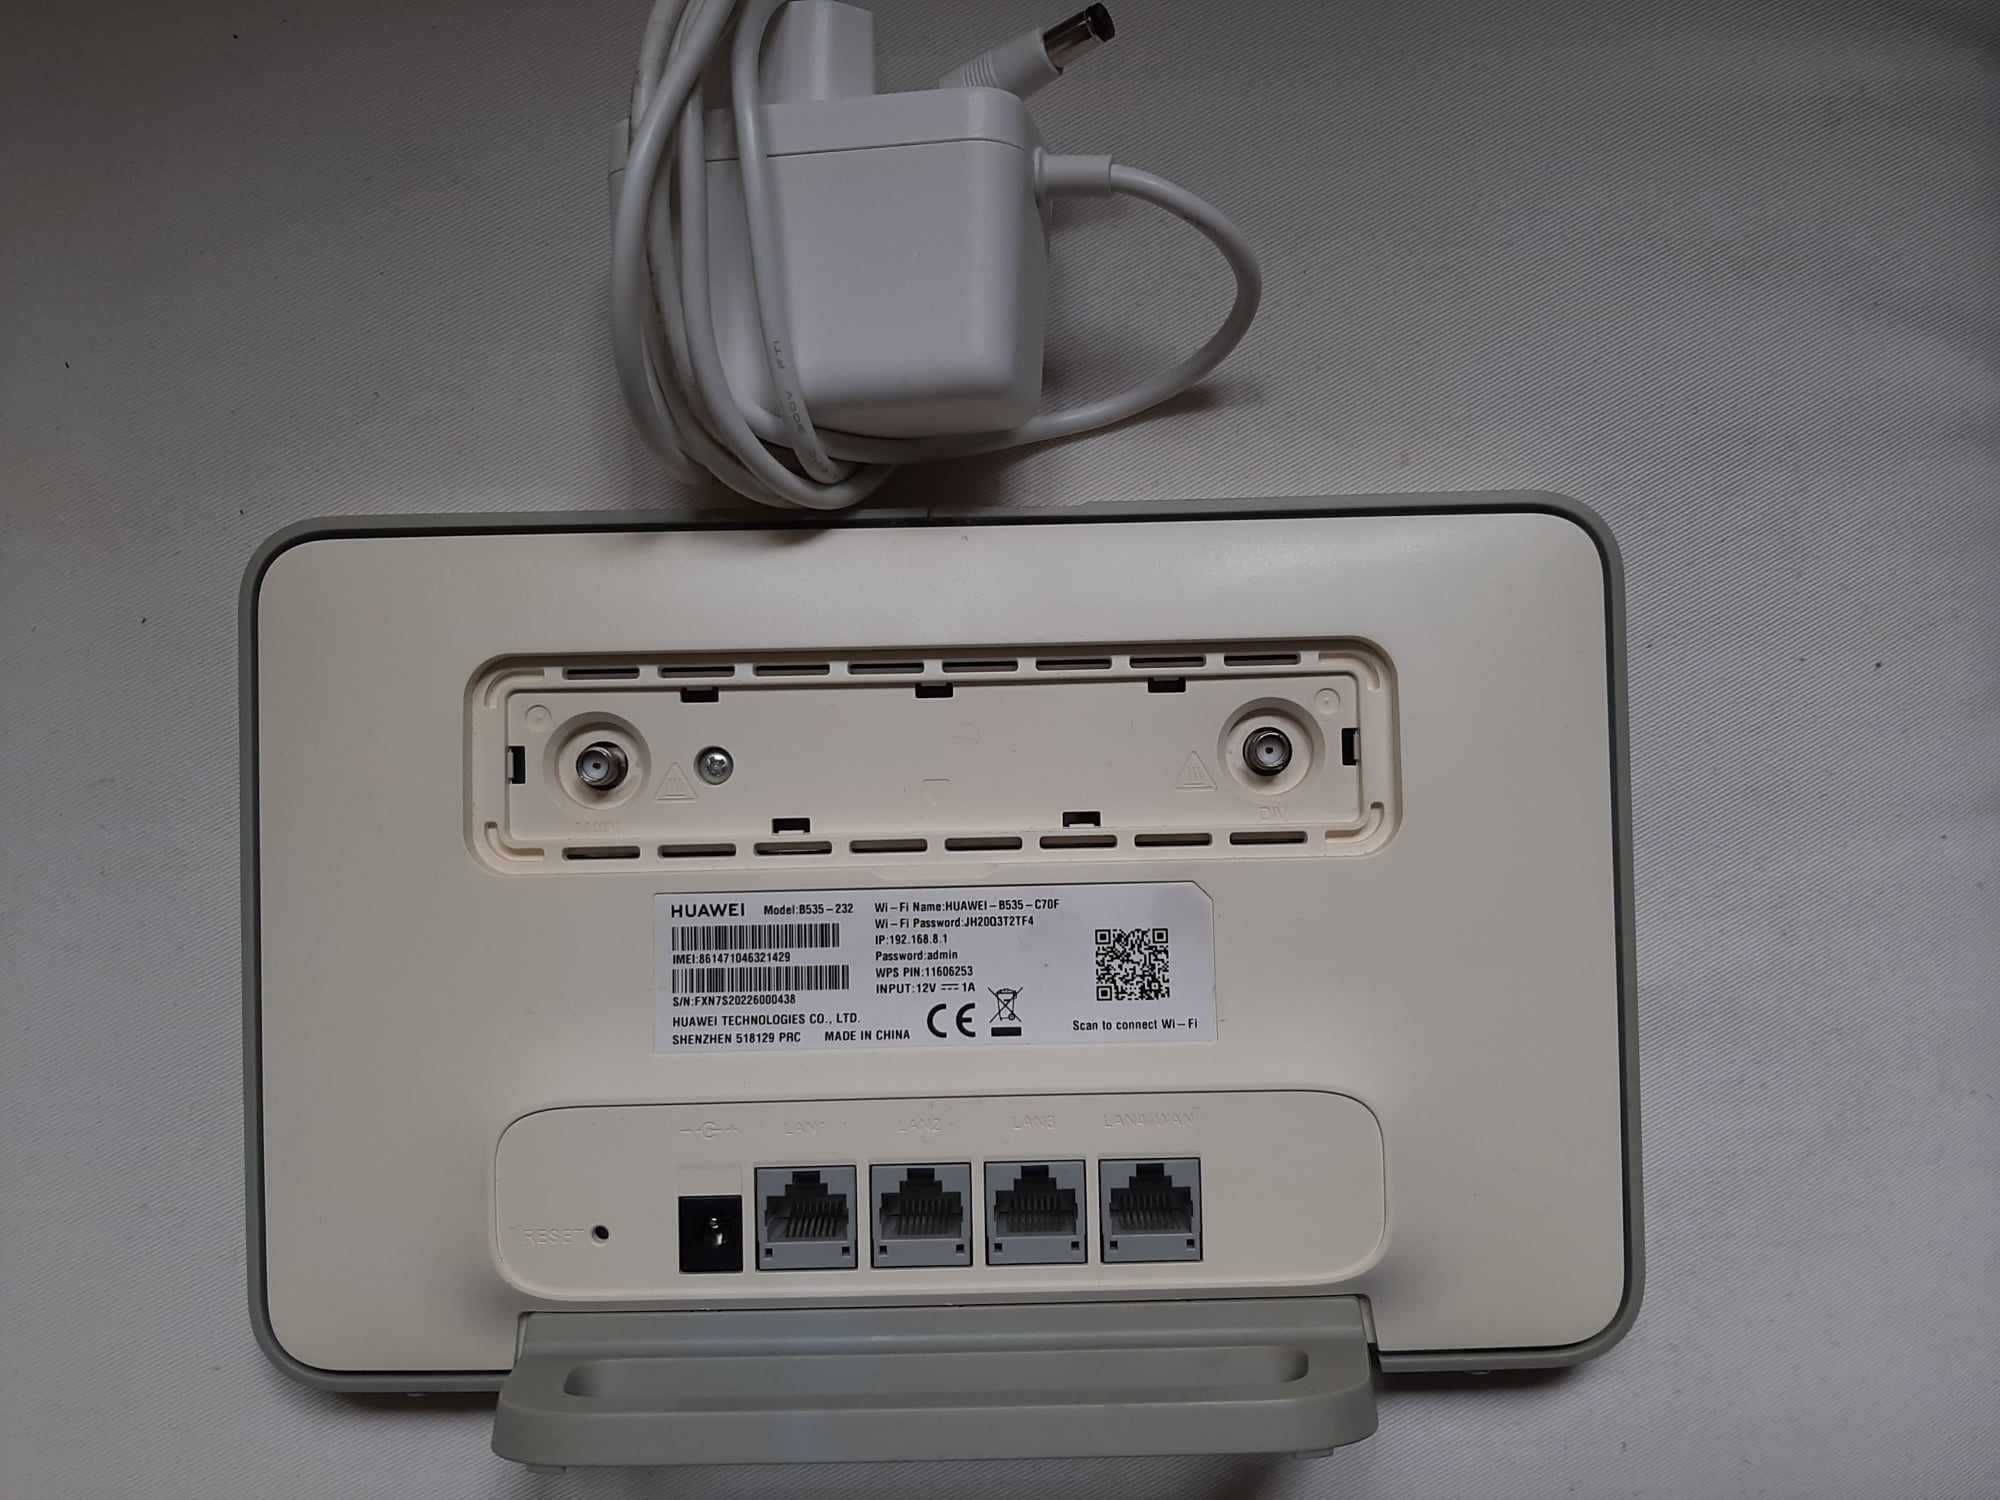 Huawei B535-232 router (modem) 4G LTE